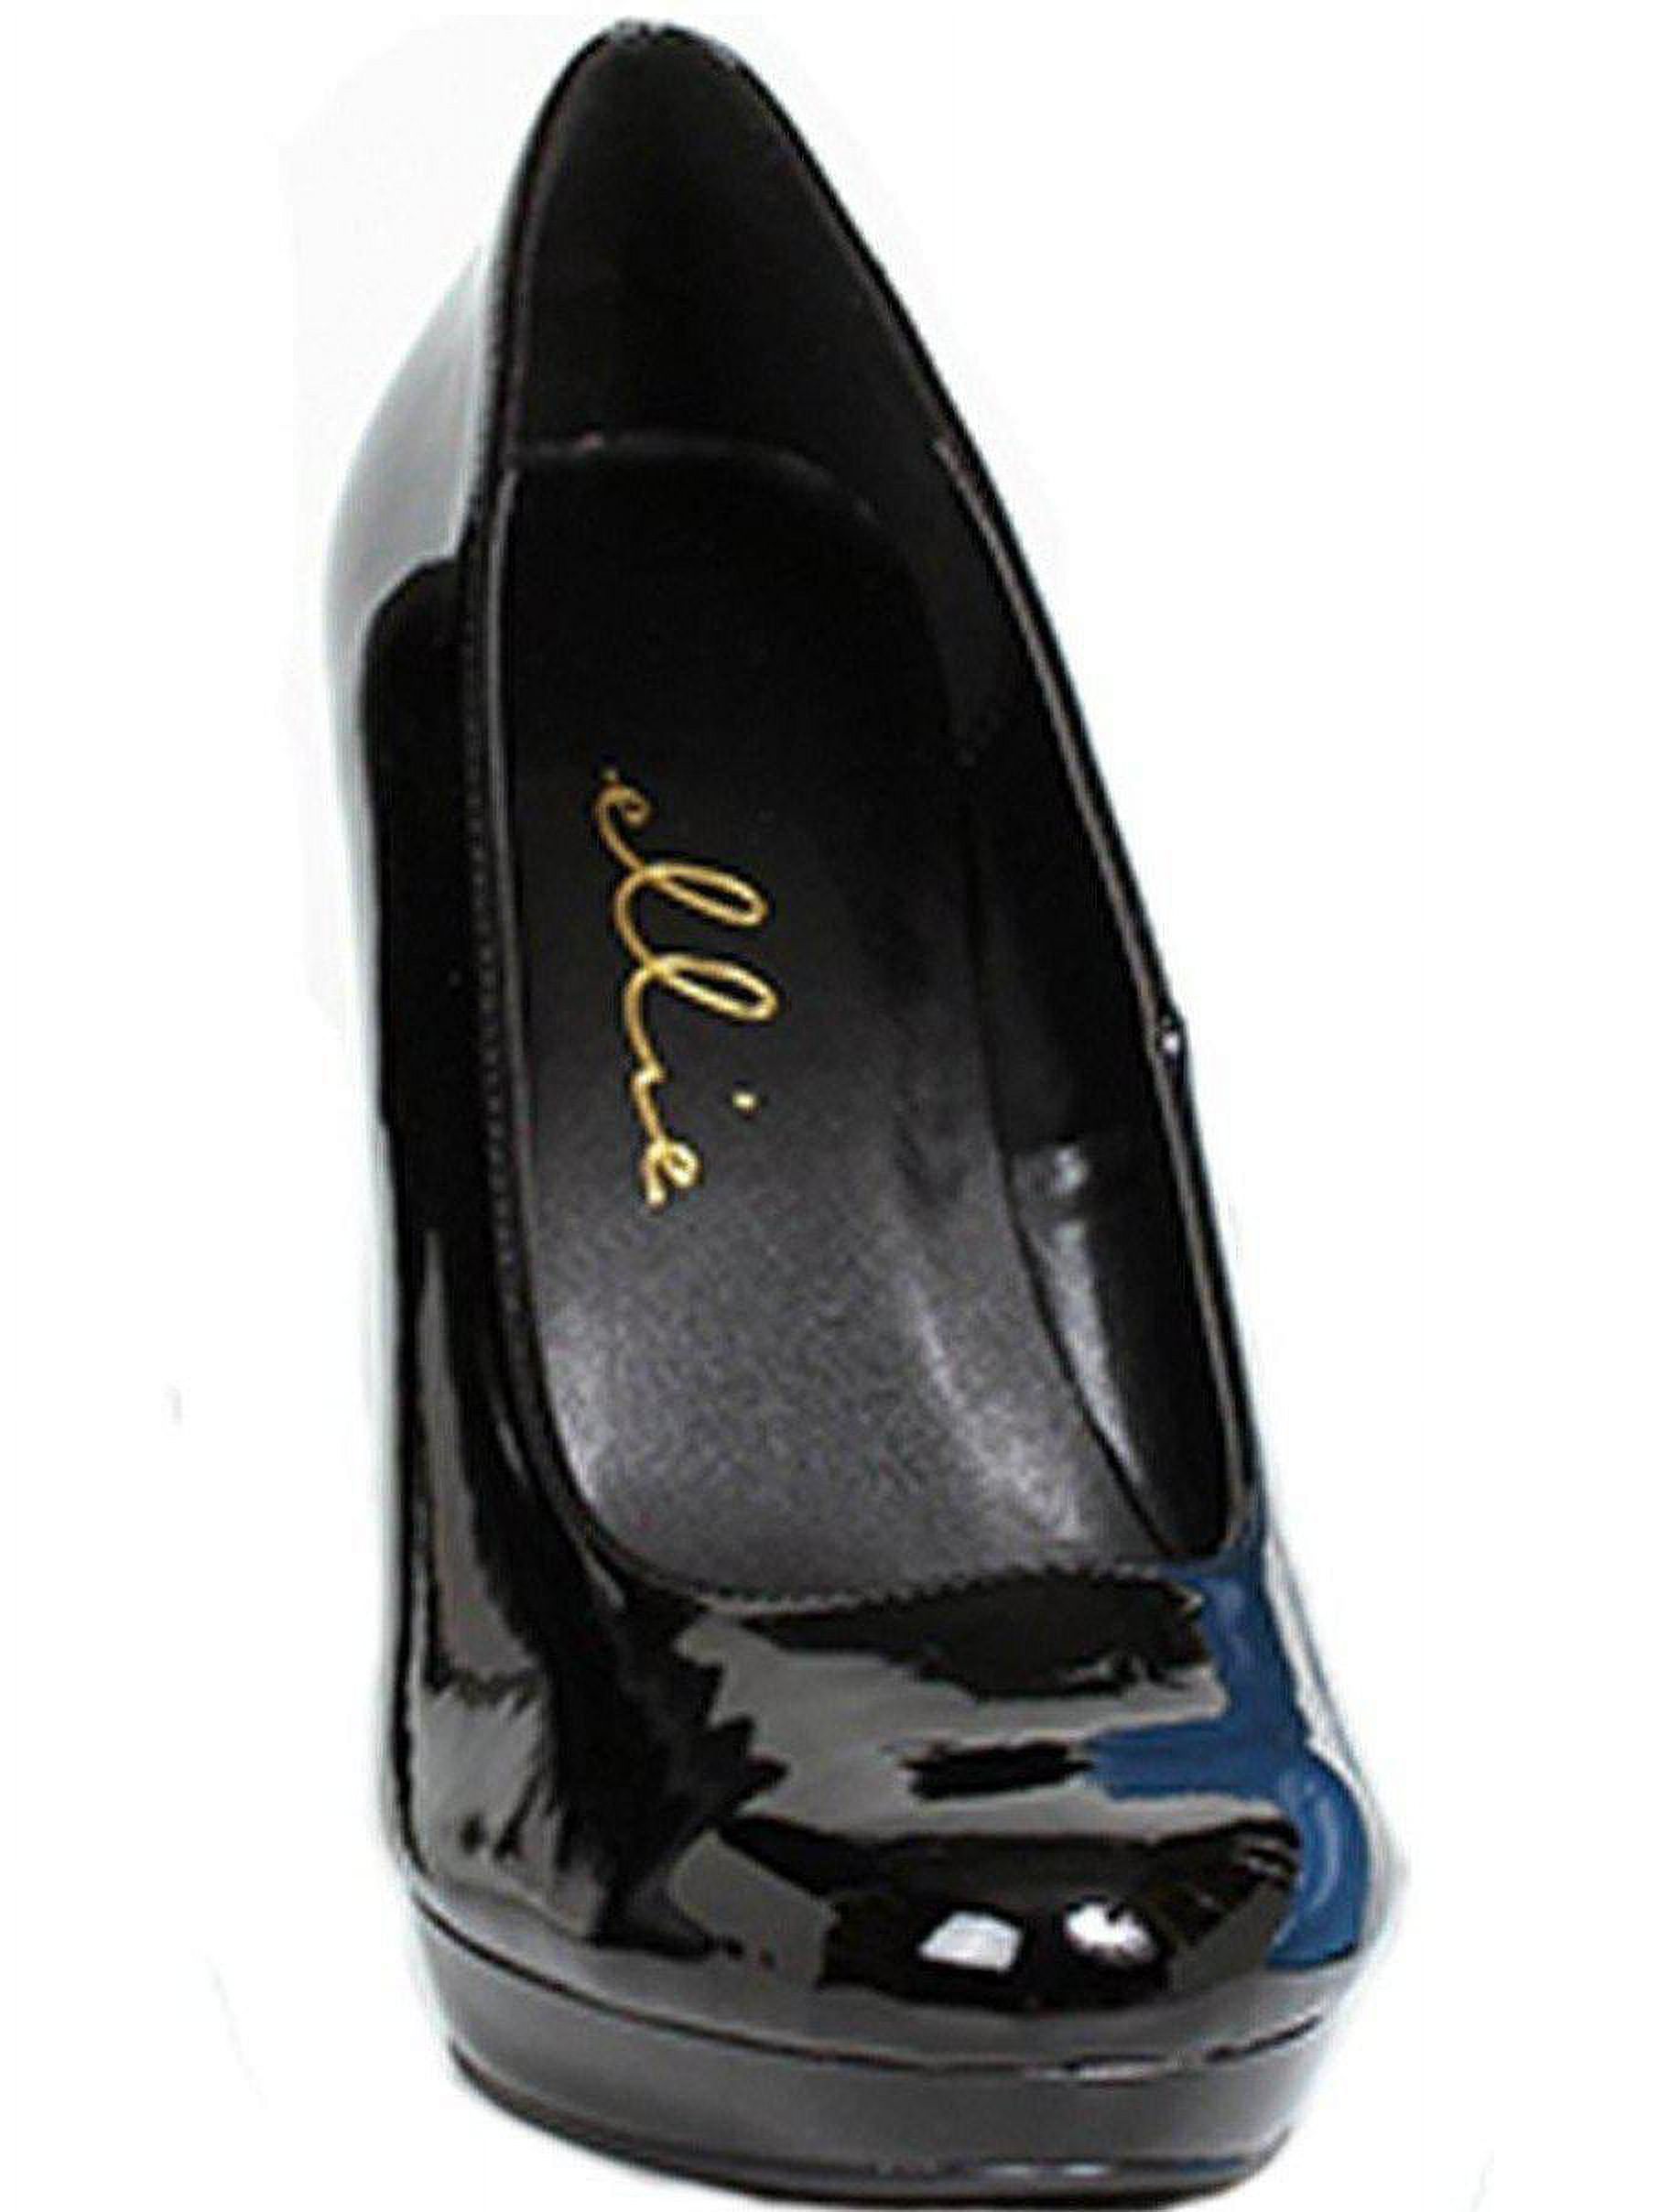 521-FEMME-W Wide Width Pump Shoes - image 2 of 2